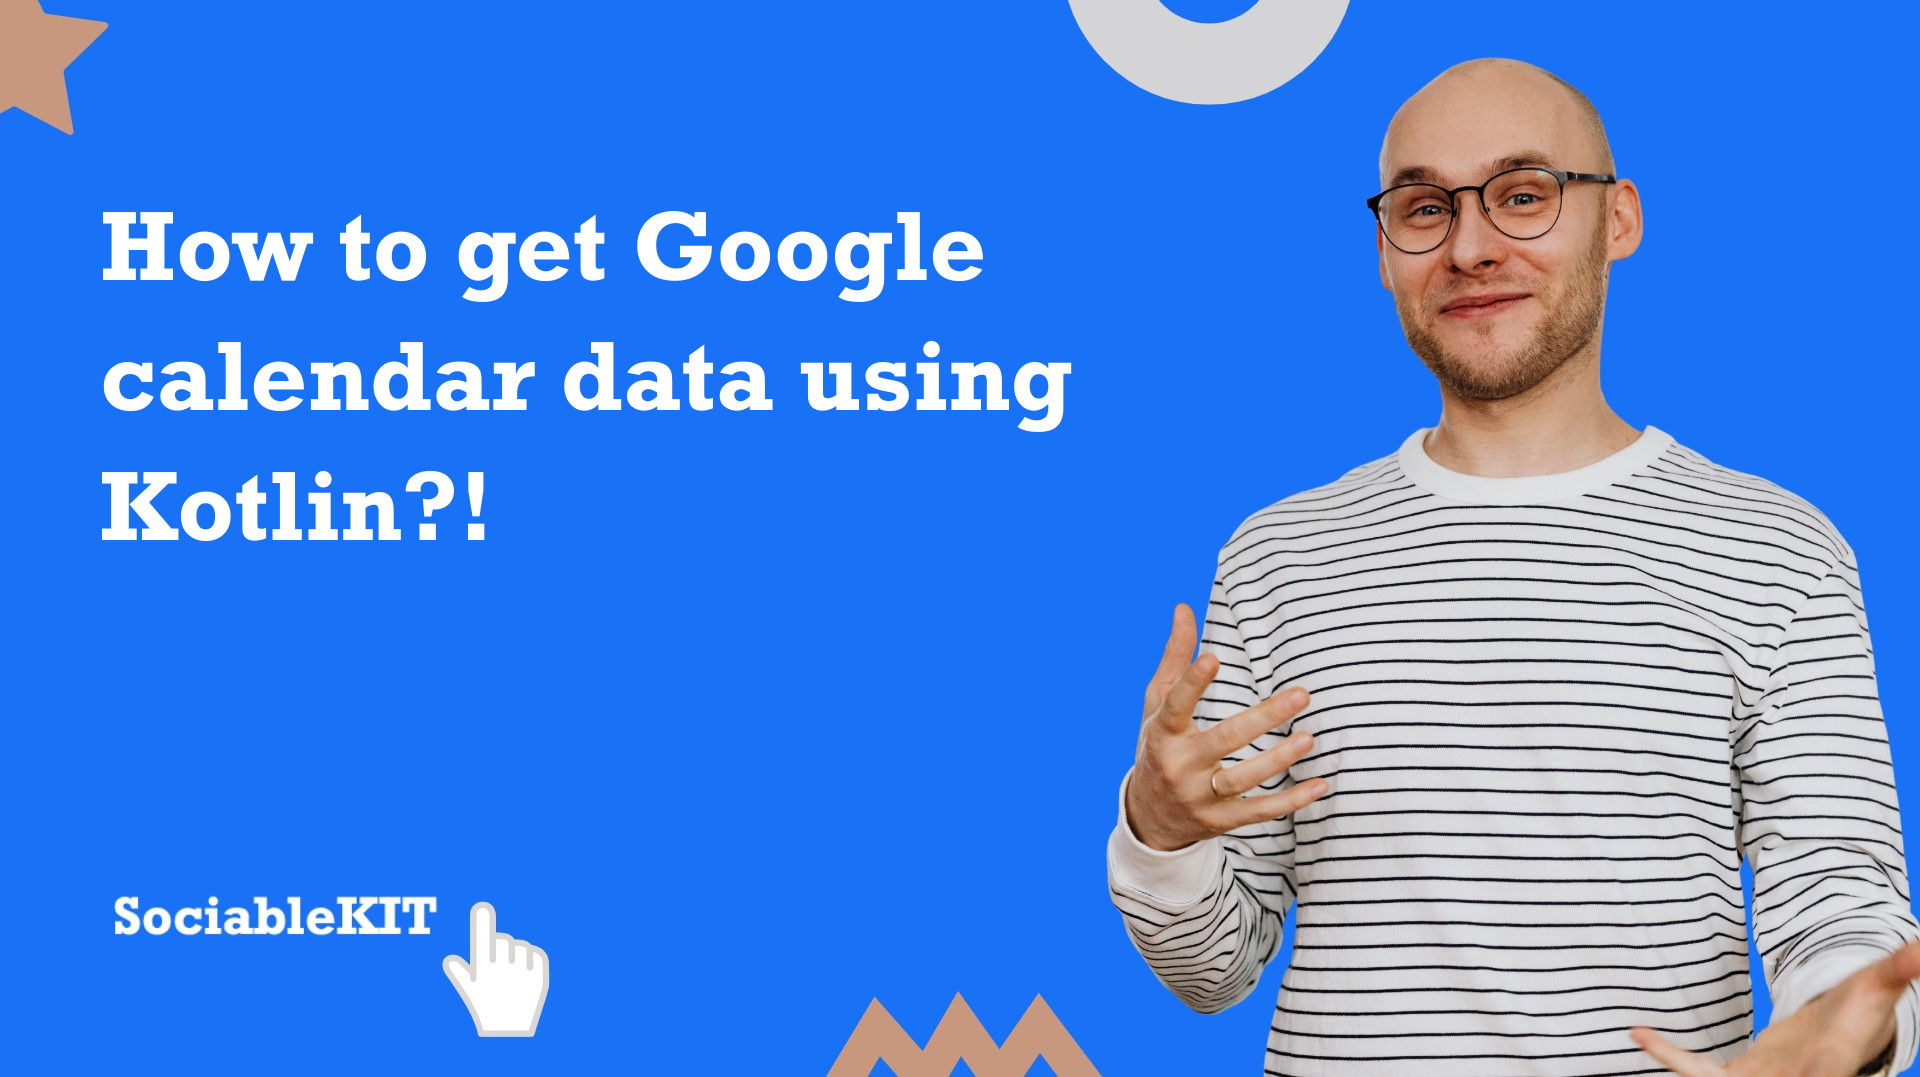 How to get Google calendar data using Kotlin?